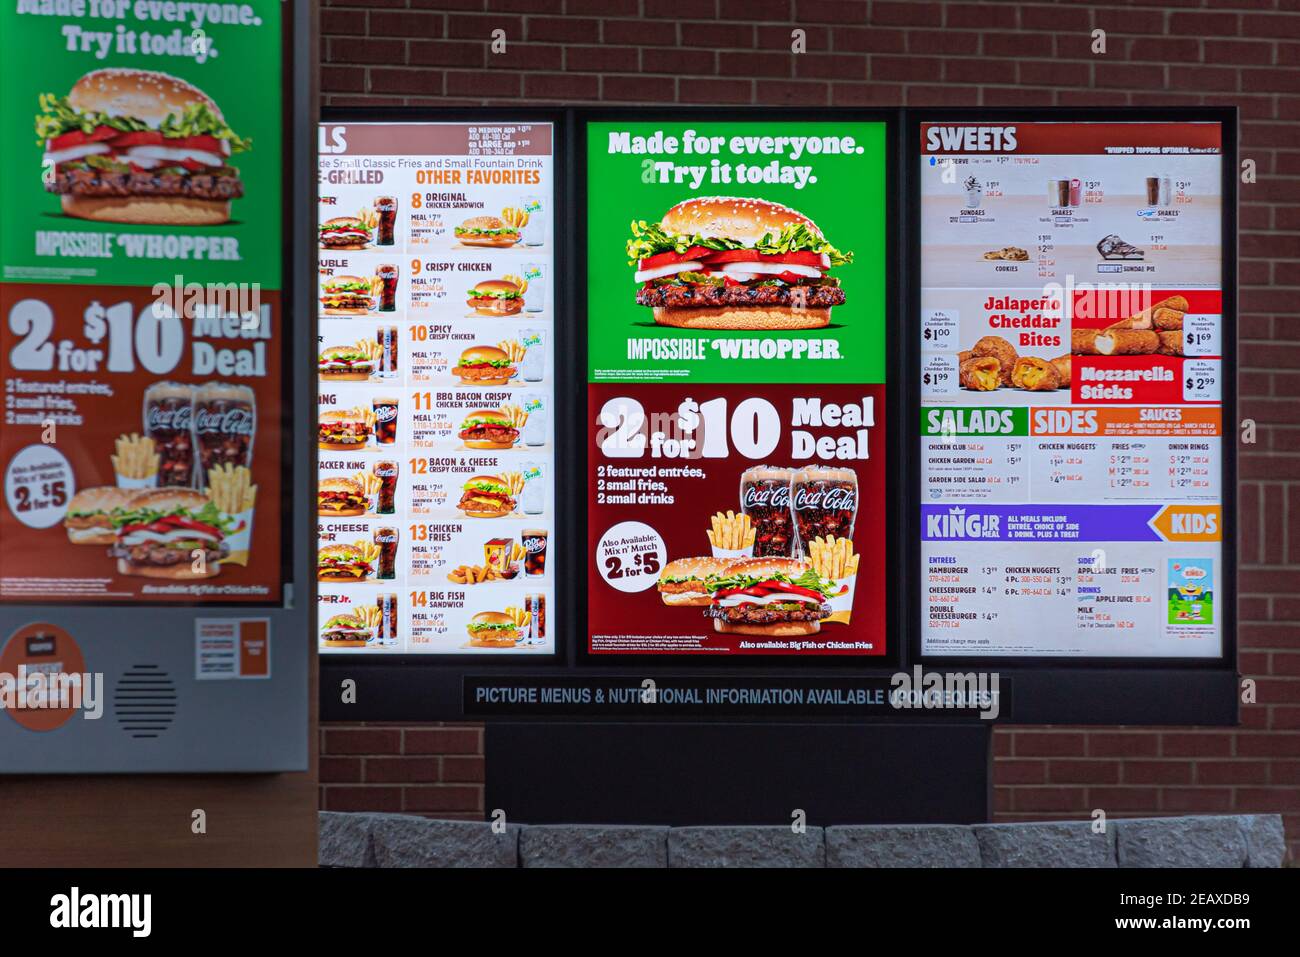 Burger king menu fotografías e imágenes de alta resolución - Alamy